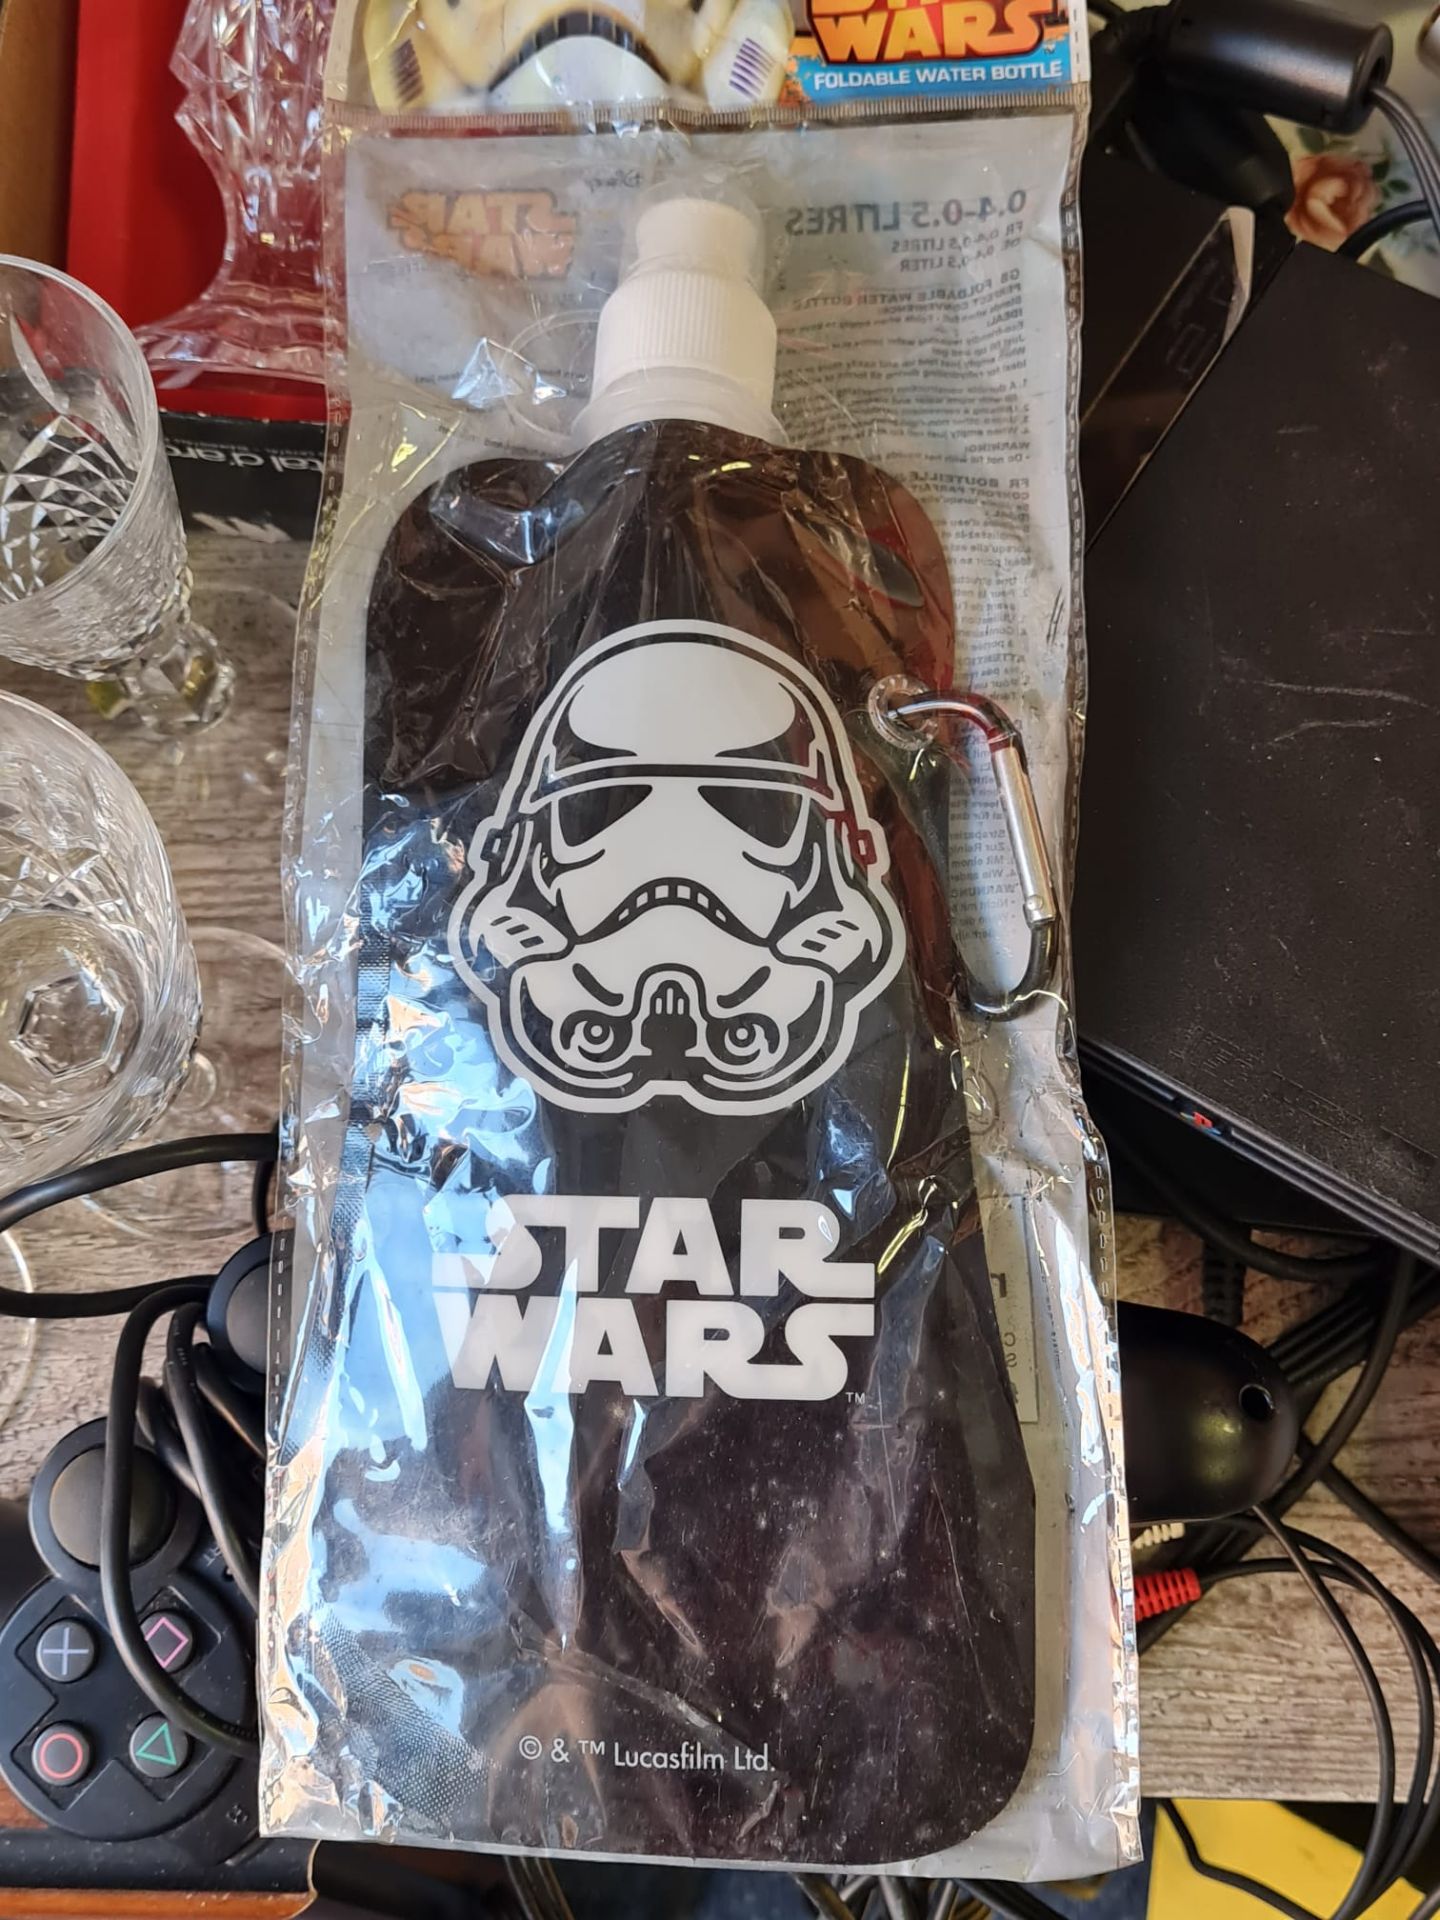 Star wars bottle new